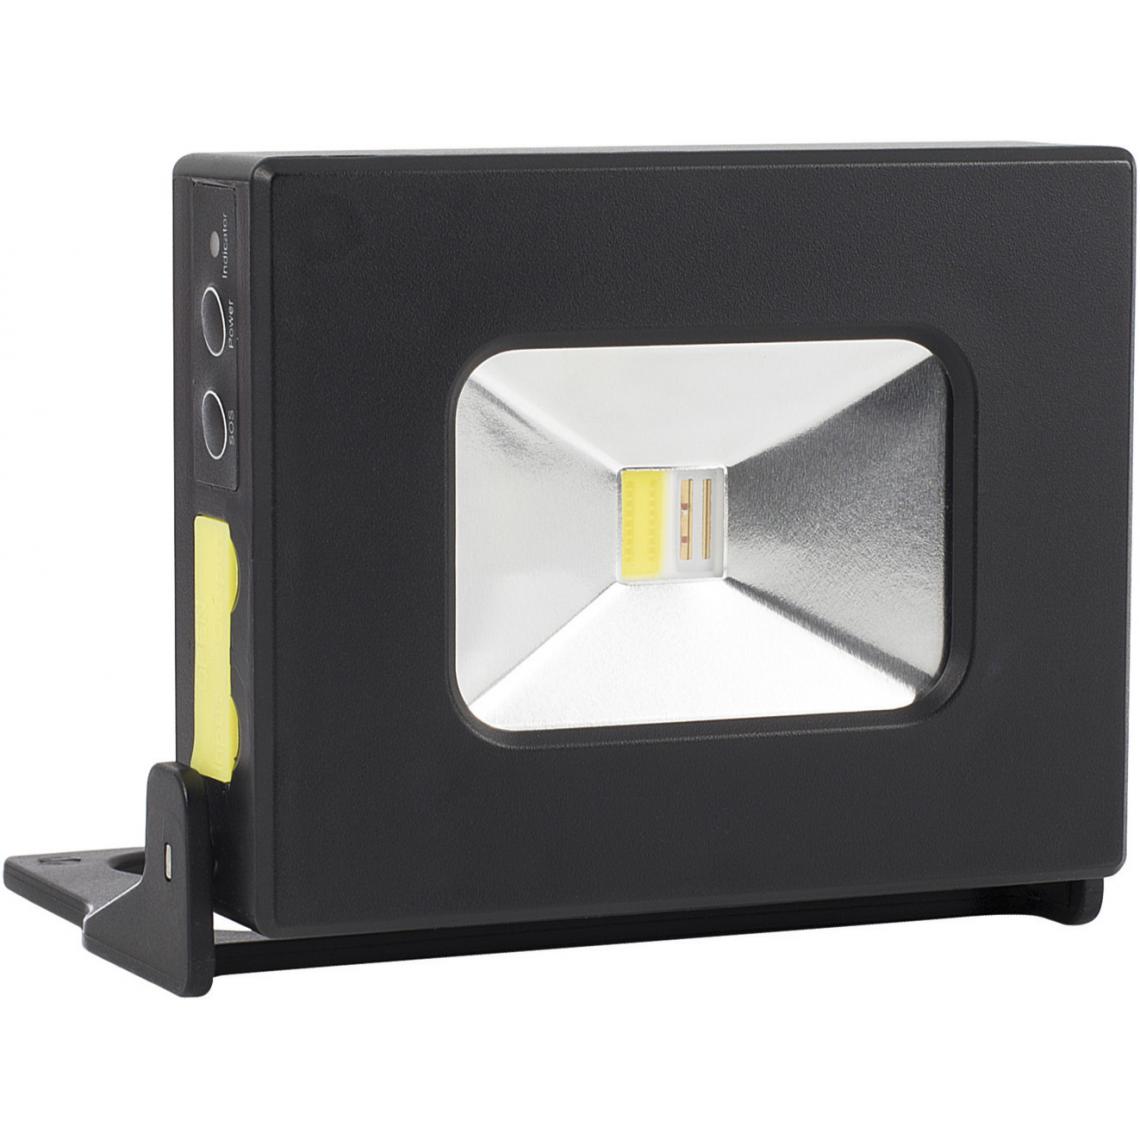 Tristar - Lampe De Poche Smartwares - Lampes portatives sans fil